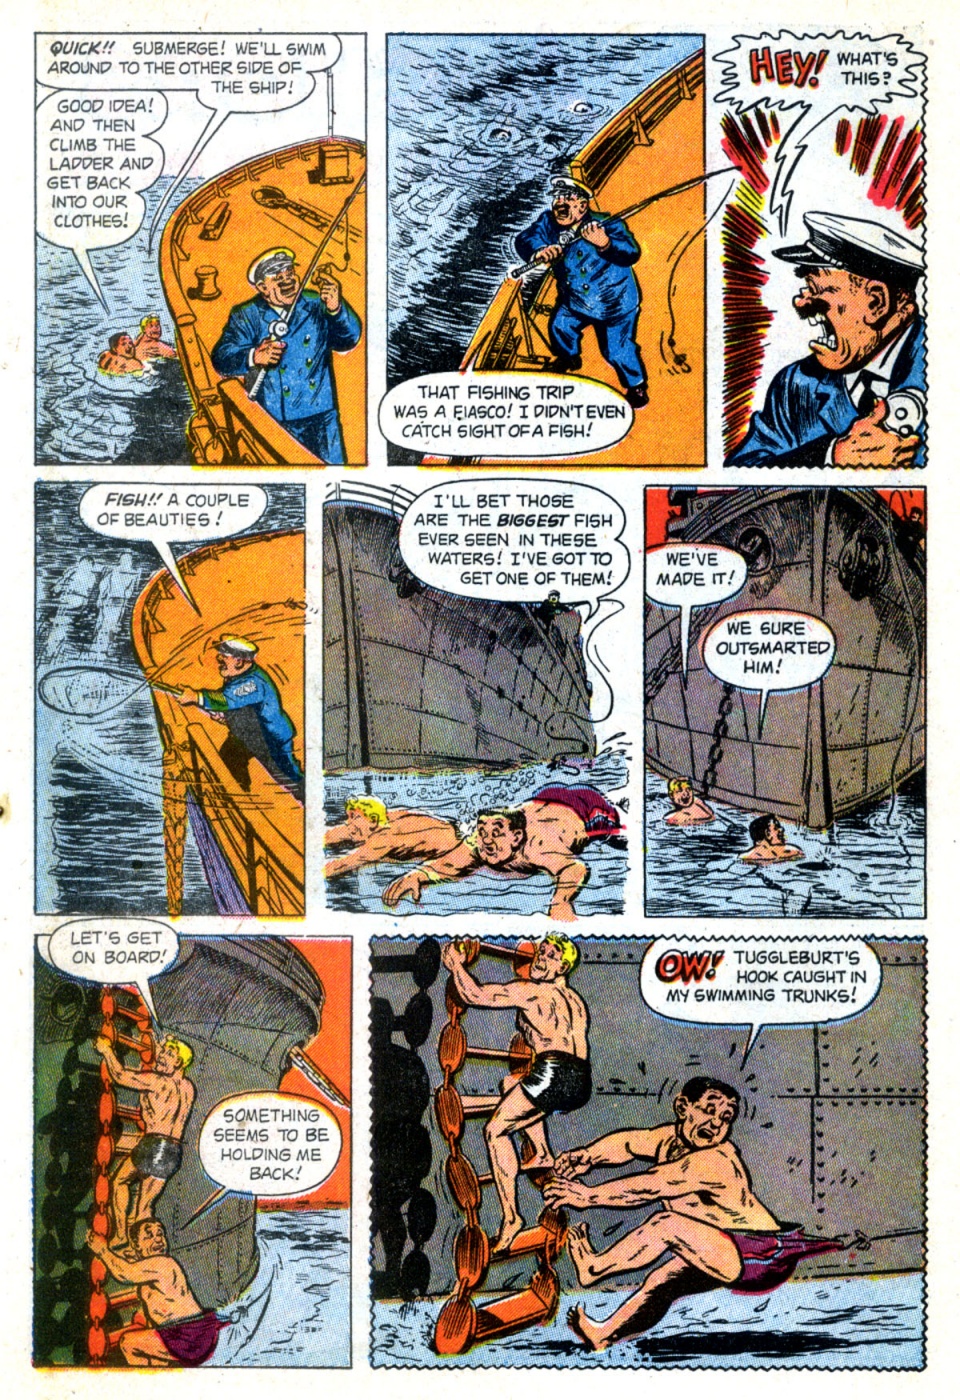 Anchors the Salt Water Daffy - Comics (b) (22)